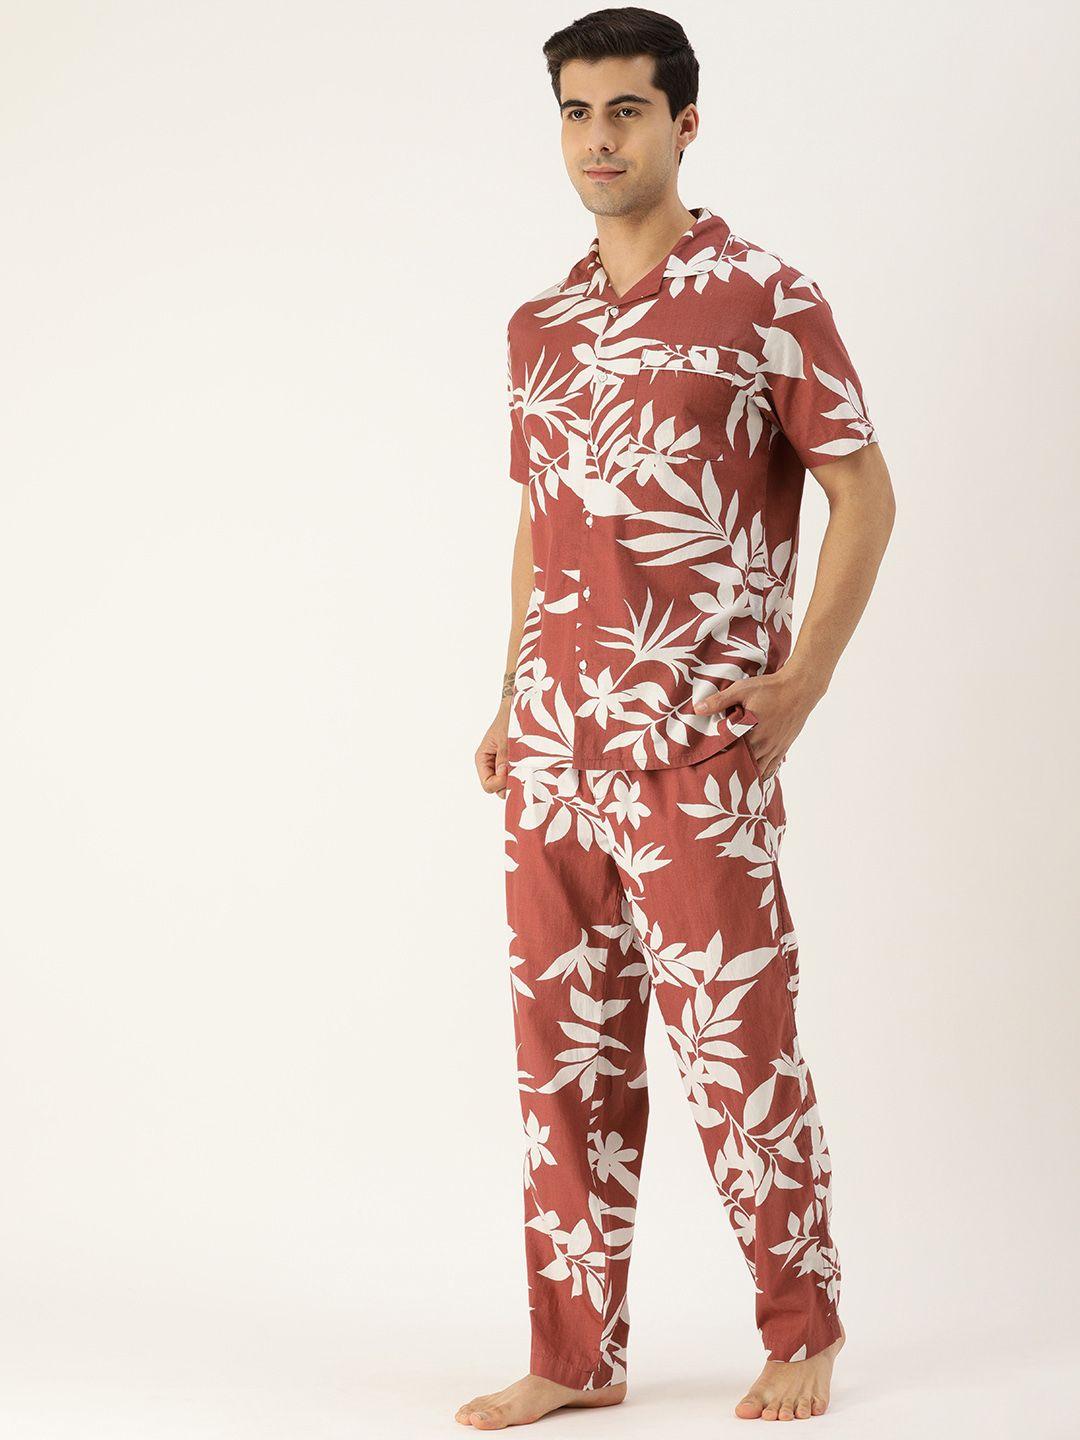 bene kleed men brown & white floral print pure cotton pyjamas set